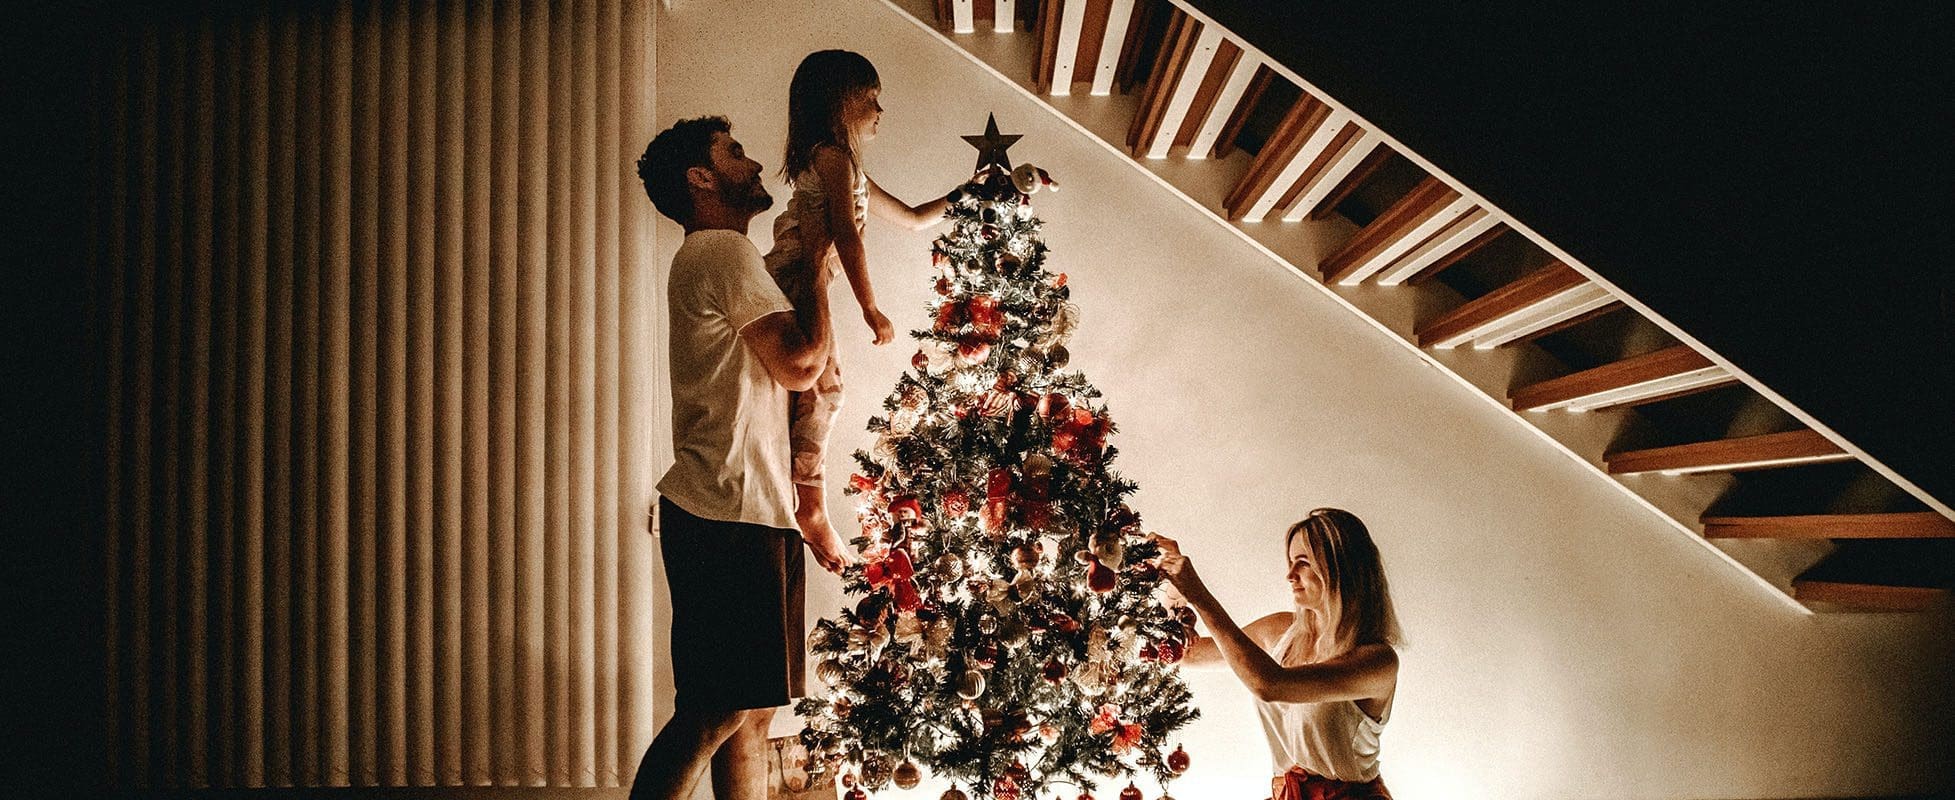 family decorating christmas tree at night